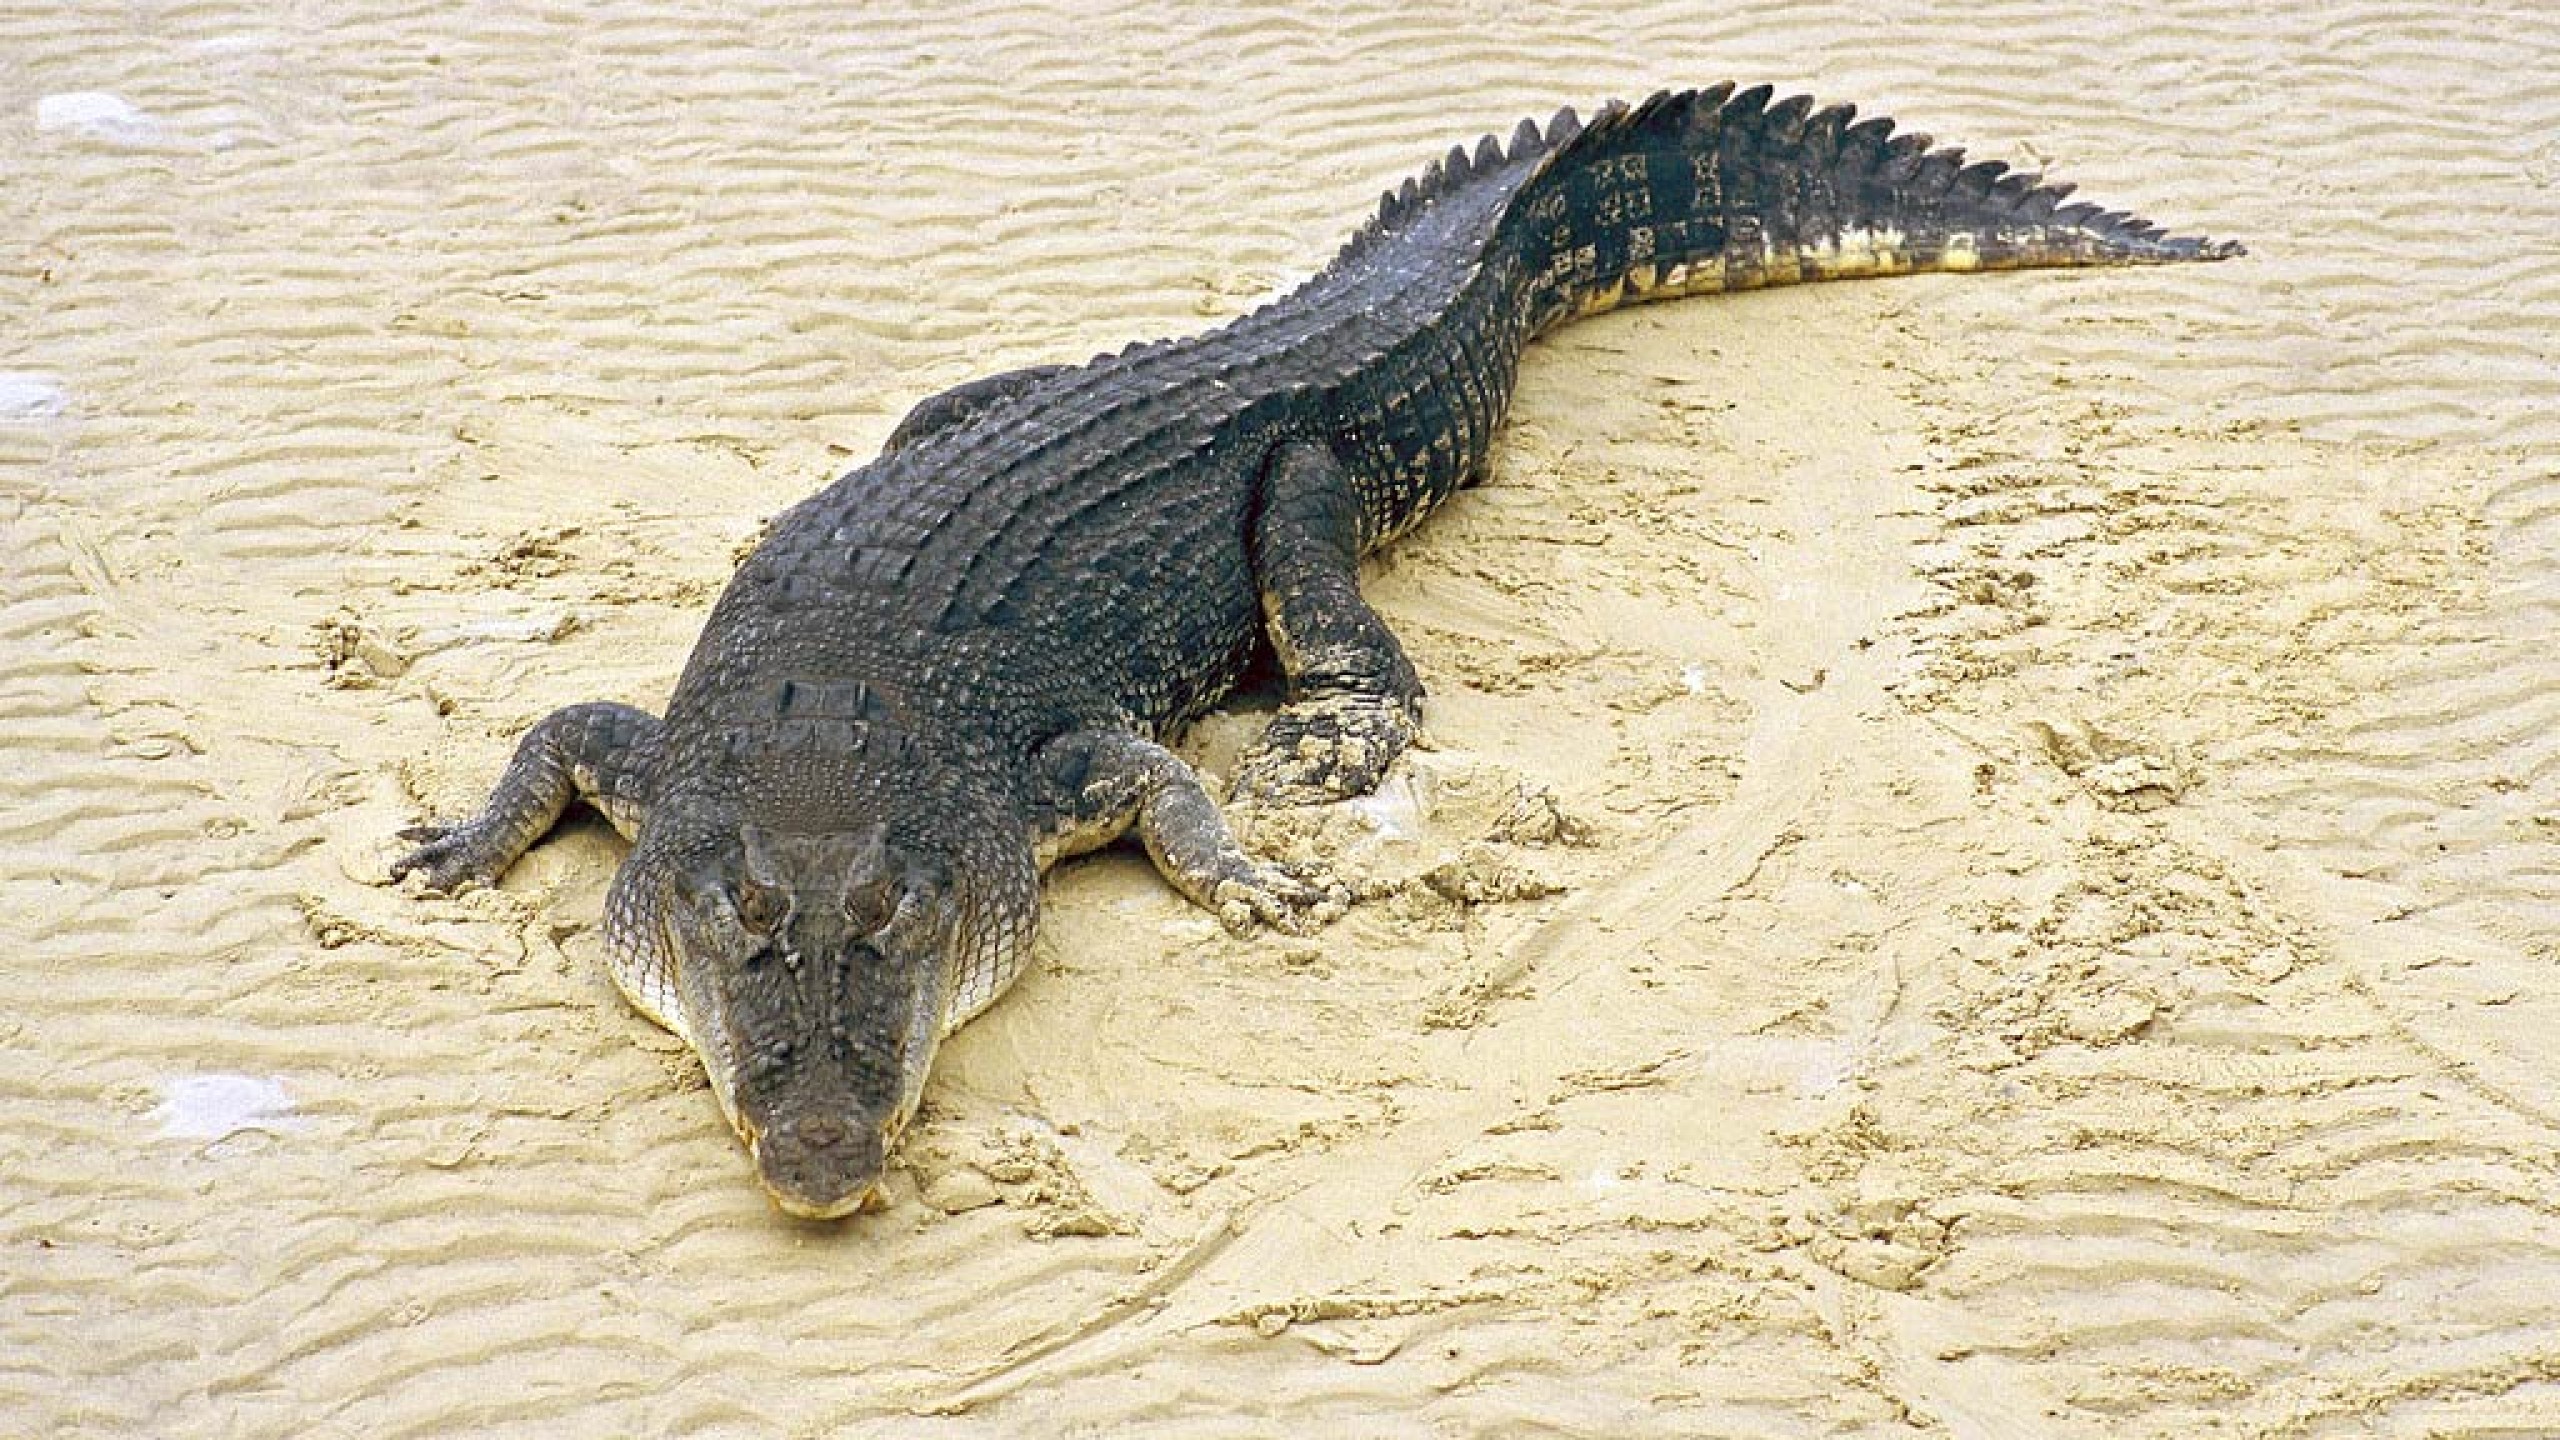 salt water crocodile hd wallpaper high resolution images widescreen desktop background wallpaper high definition picture